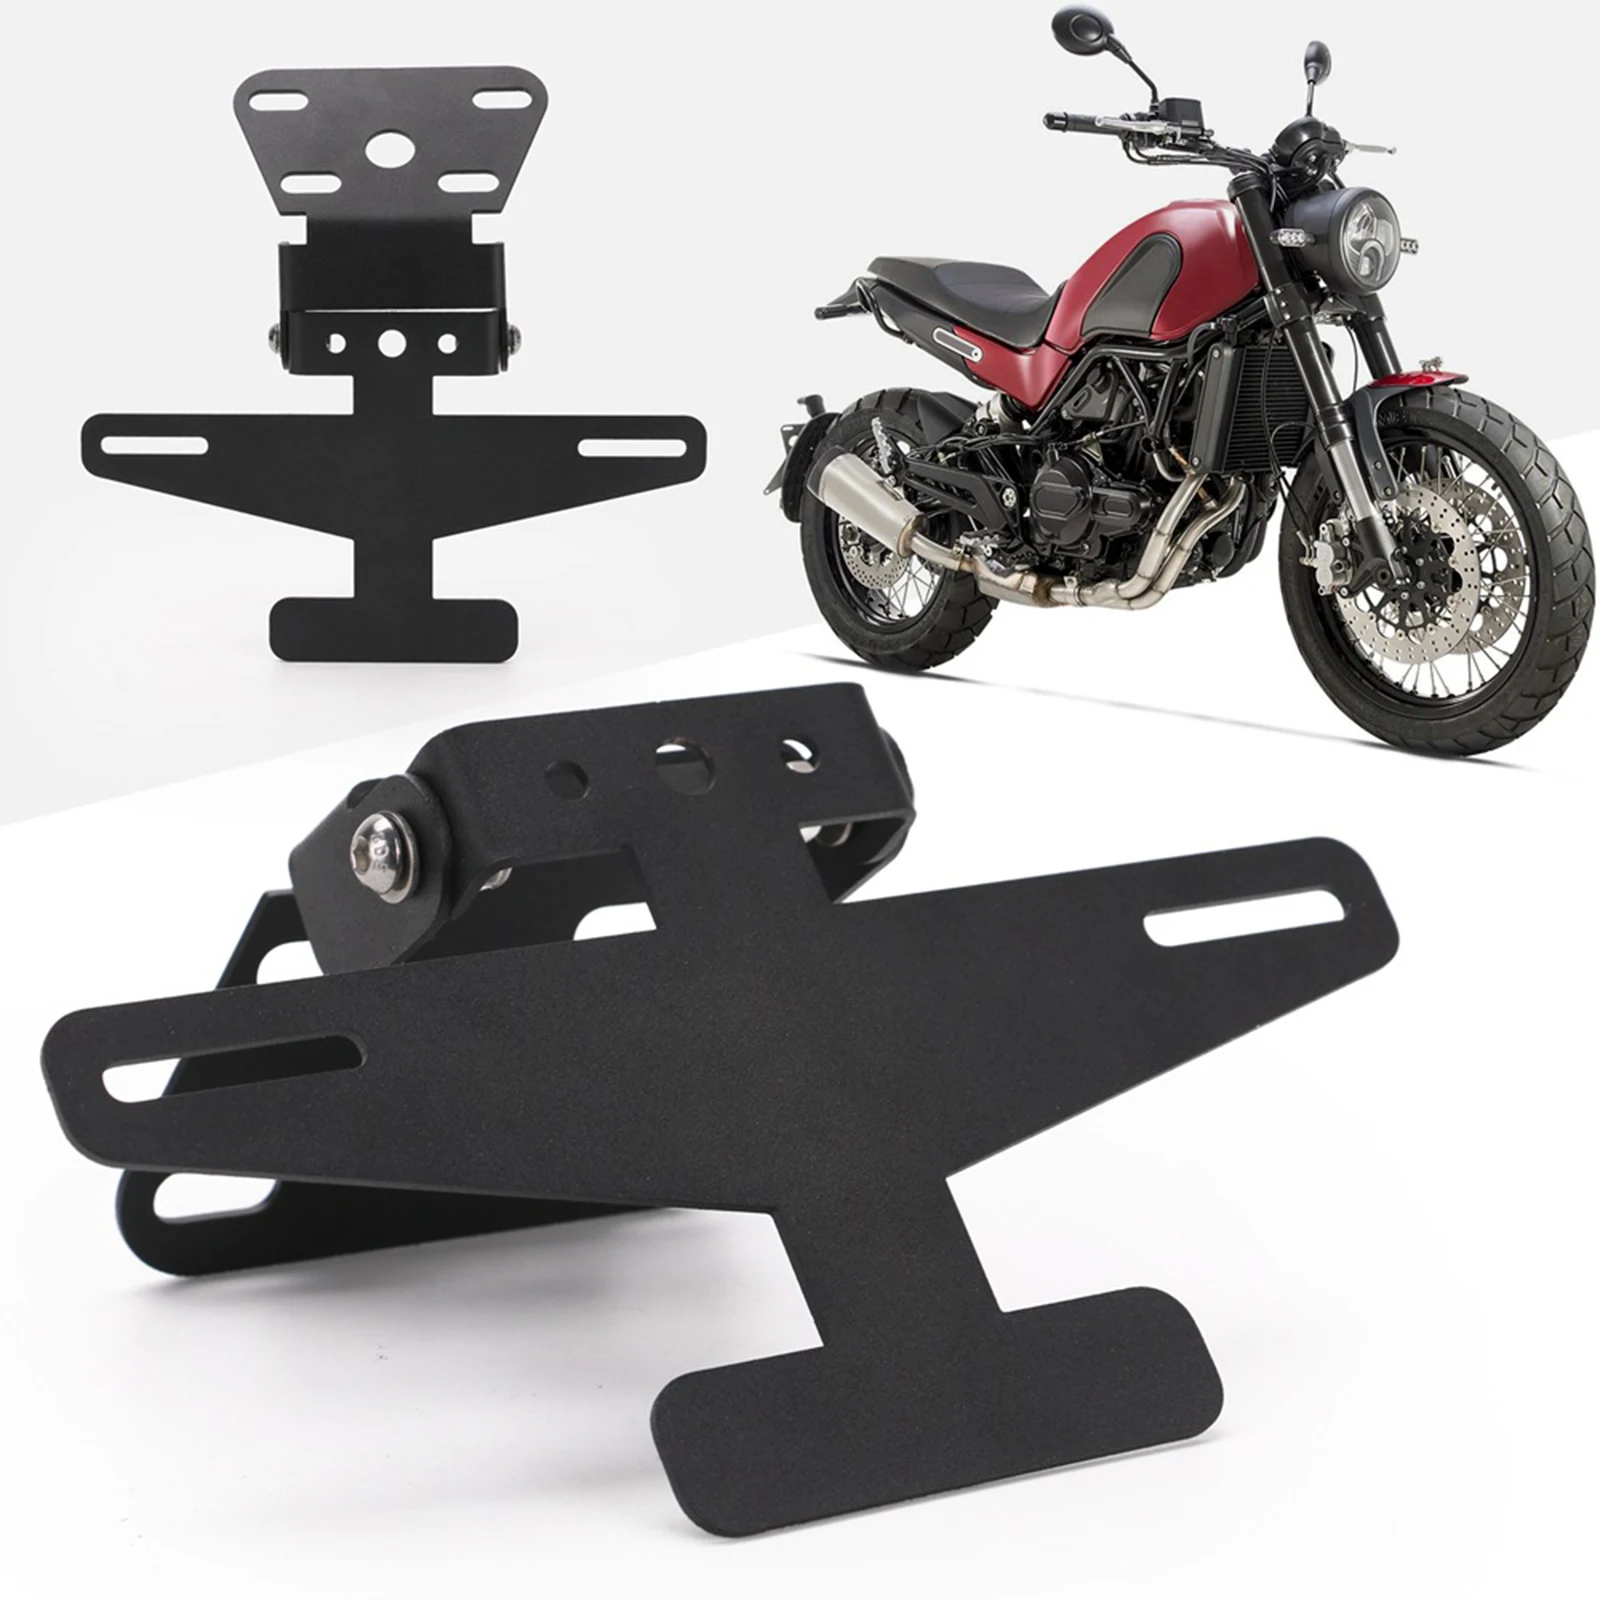 Motorcycle License Plate Frame Support Motorcycle Registration Holder For Benelli 502C